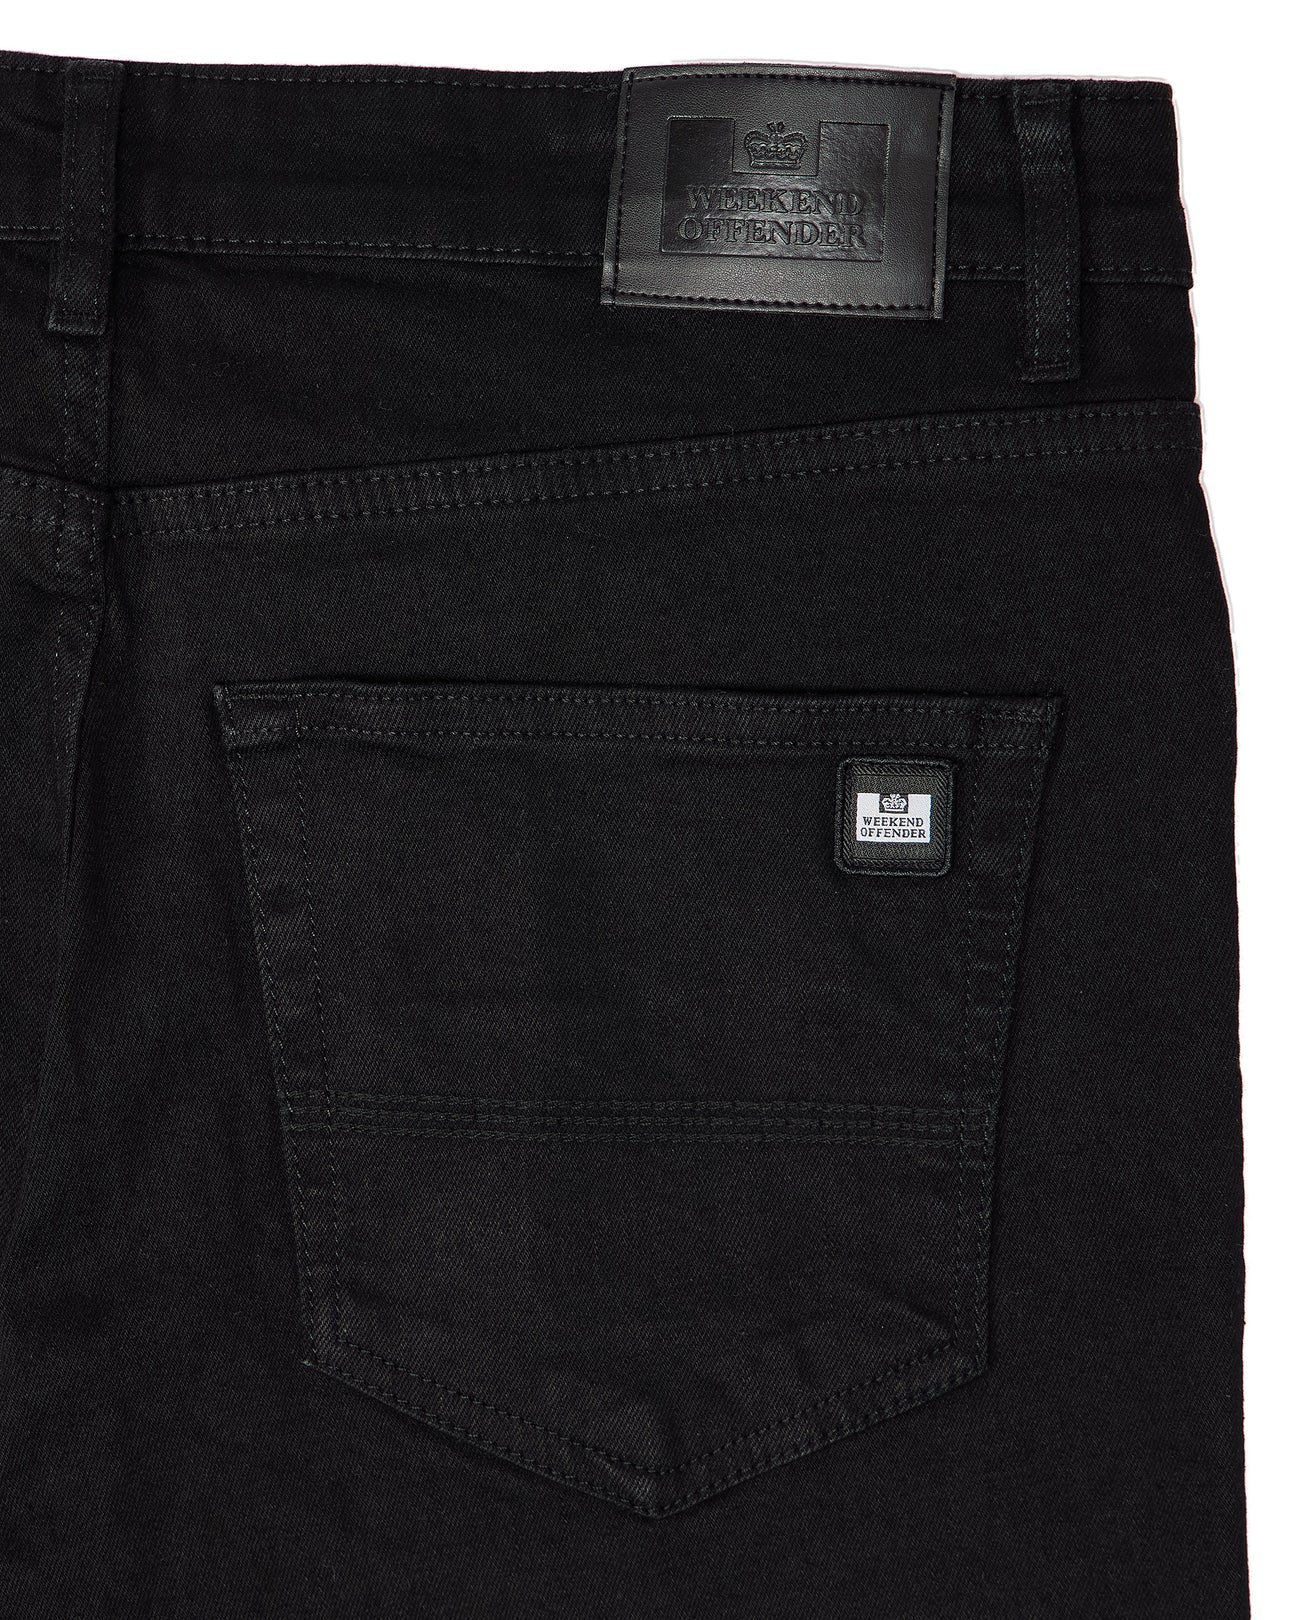 Weekend Offender - 444 Tapered Black Denim Jeans